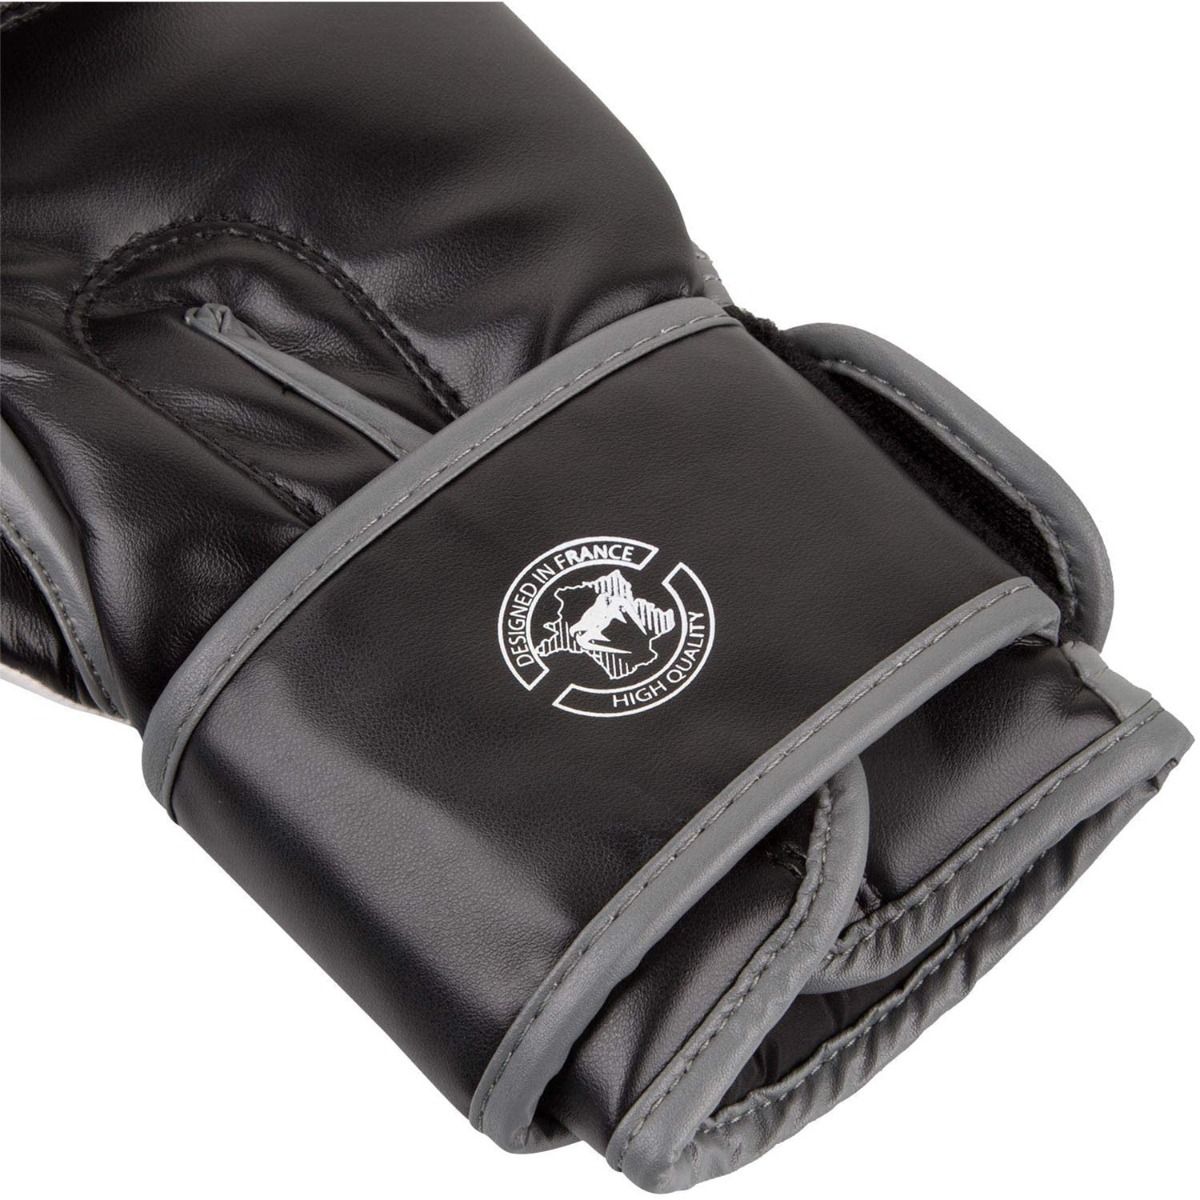 Venum Contender 2.0 Boxing Gloves White Grey Black - 8 Oz -14 Oz